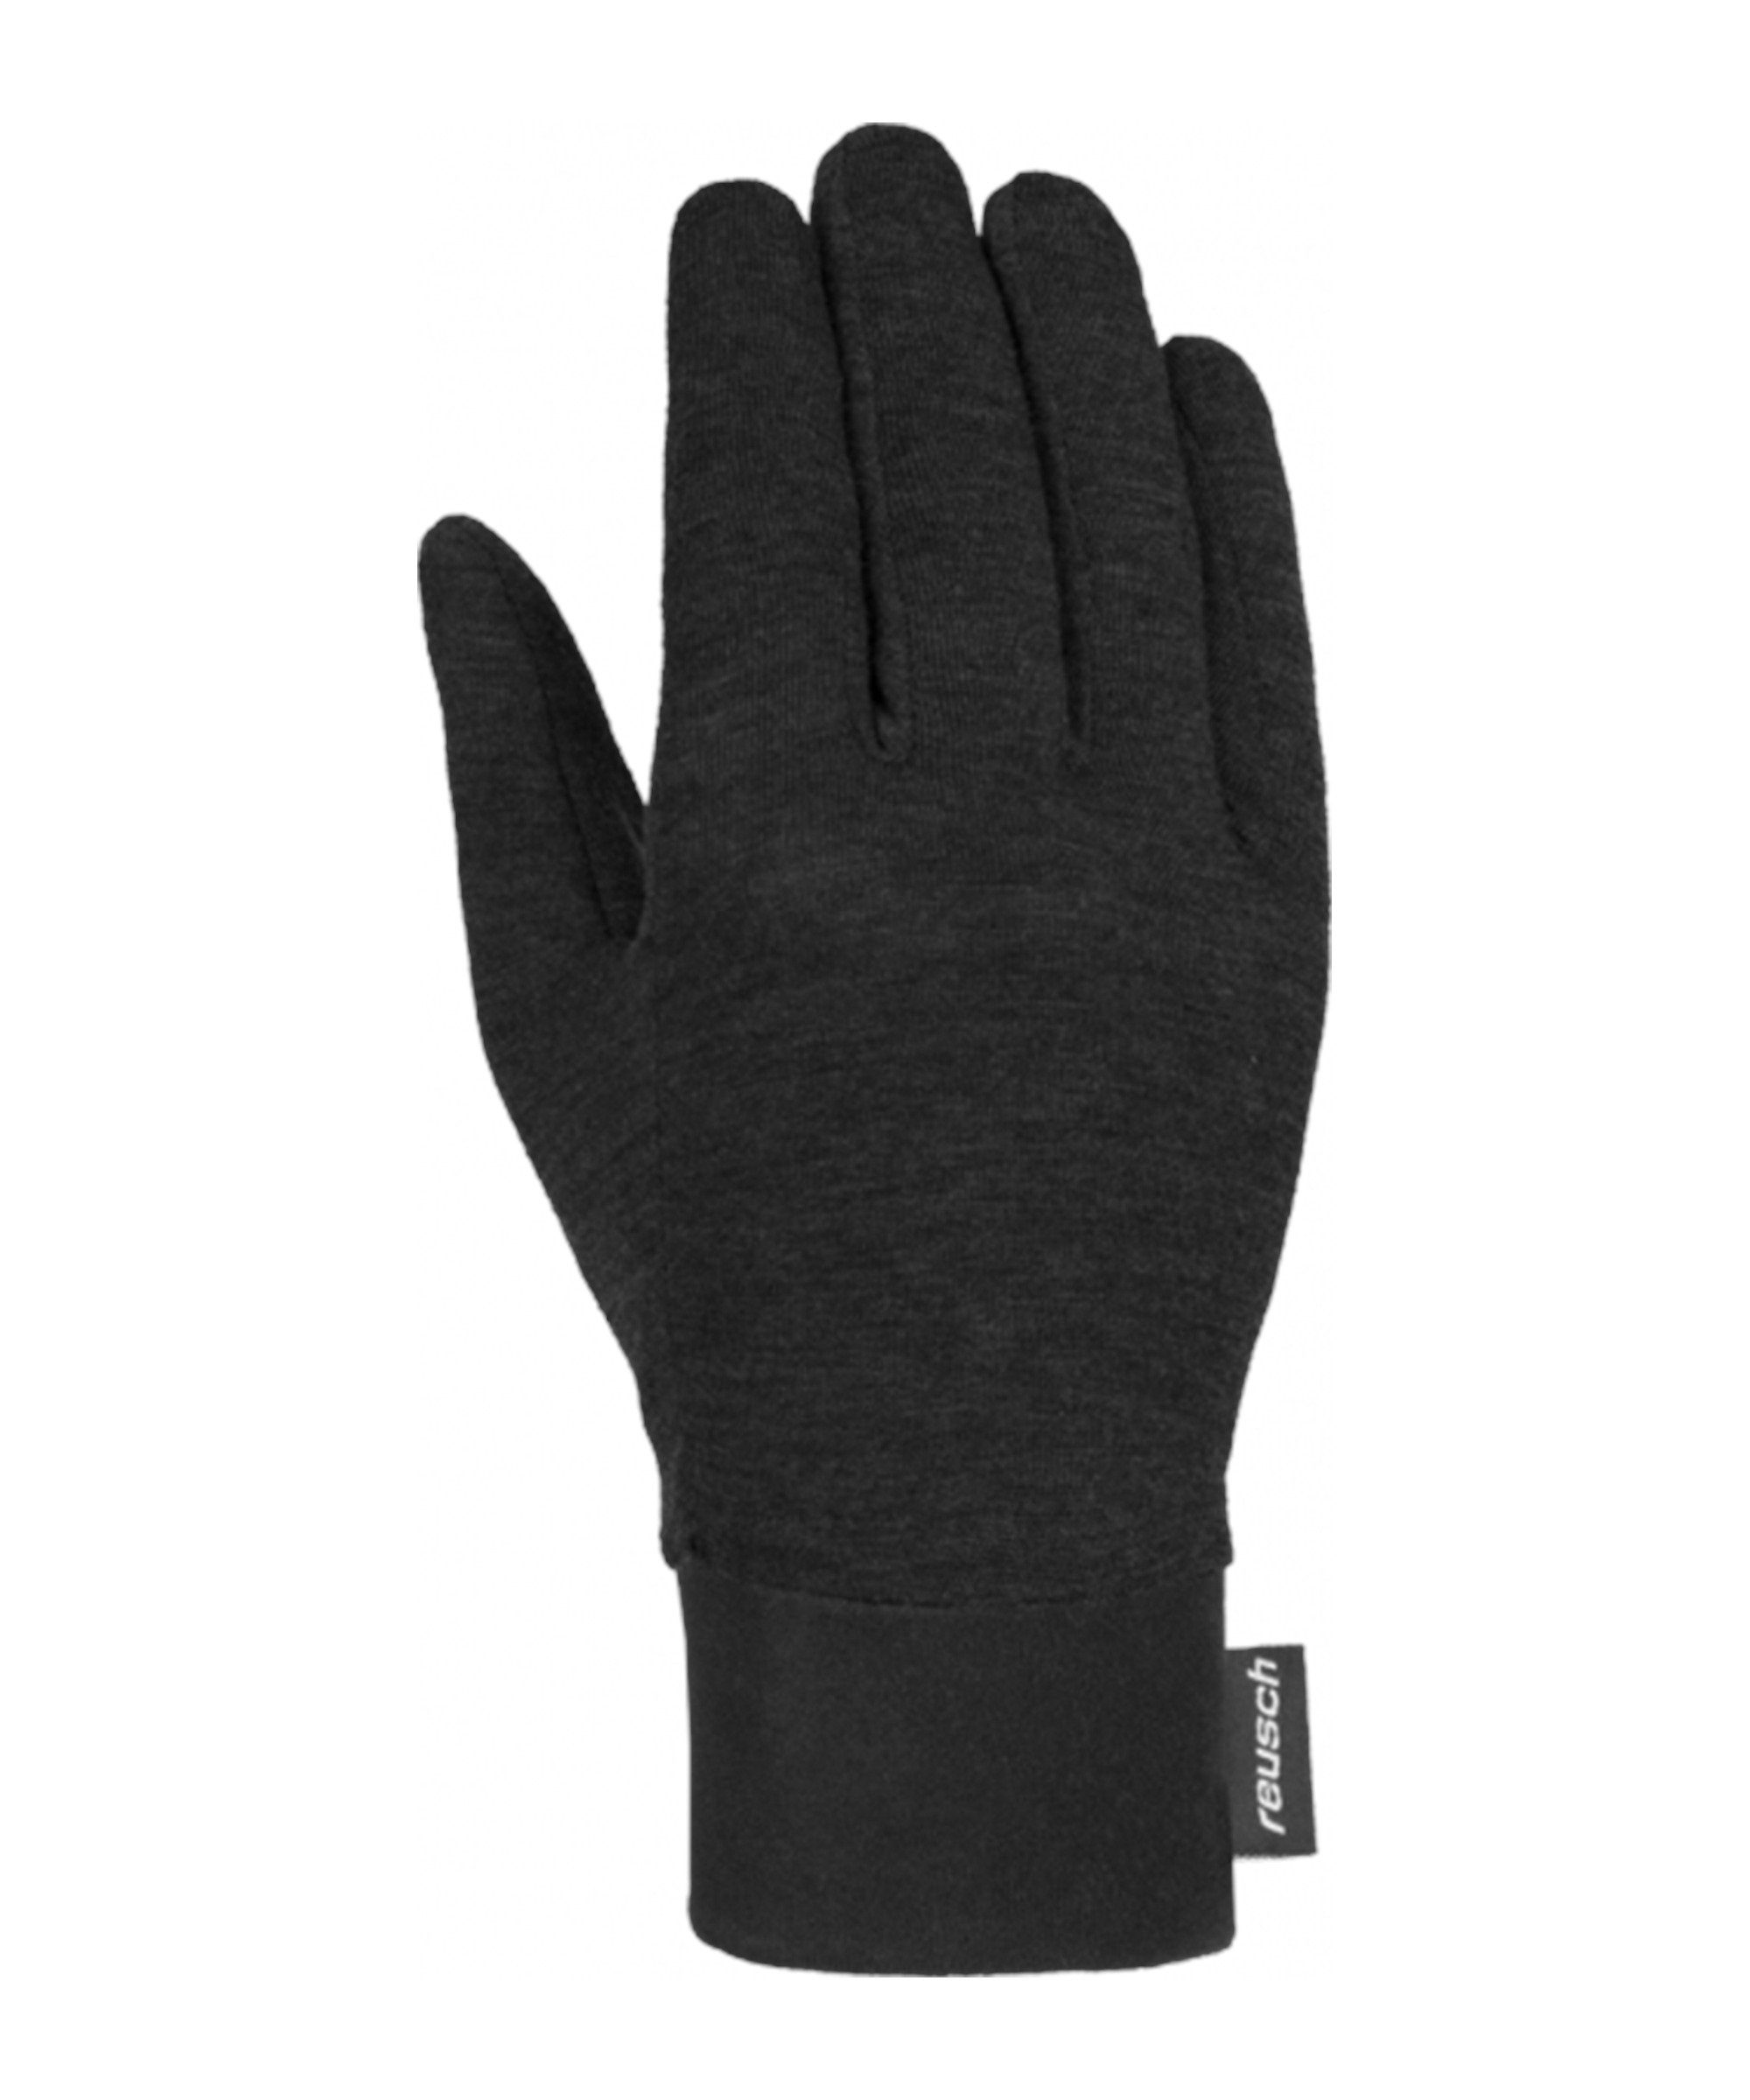 Reusch Feldspielerhandschuhe PrimaLoft Silk liner Handschuh schwarz (200) | Handschuhe